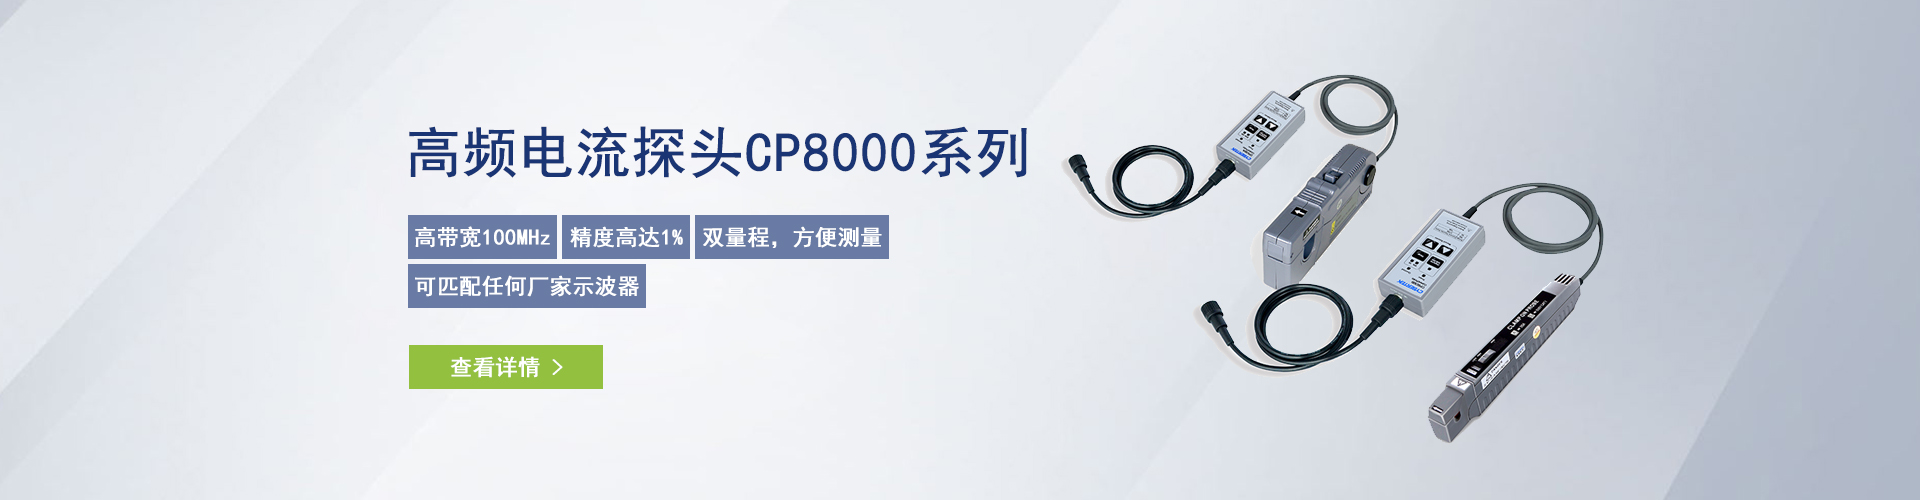 CP8000